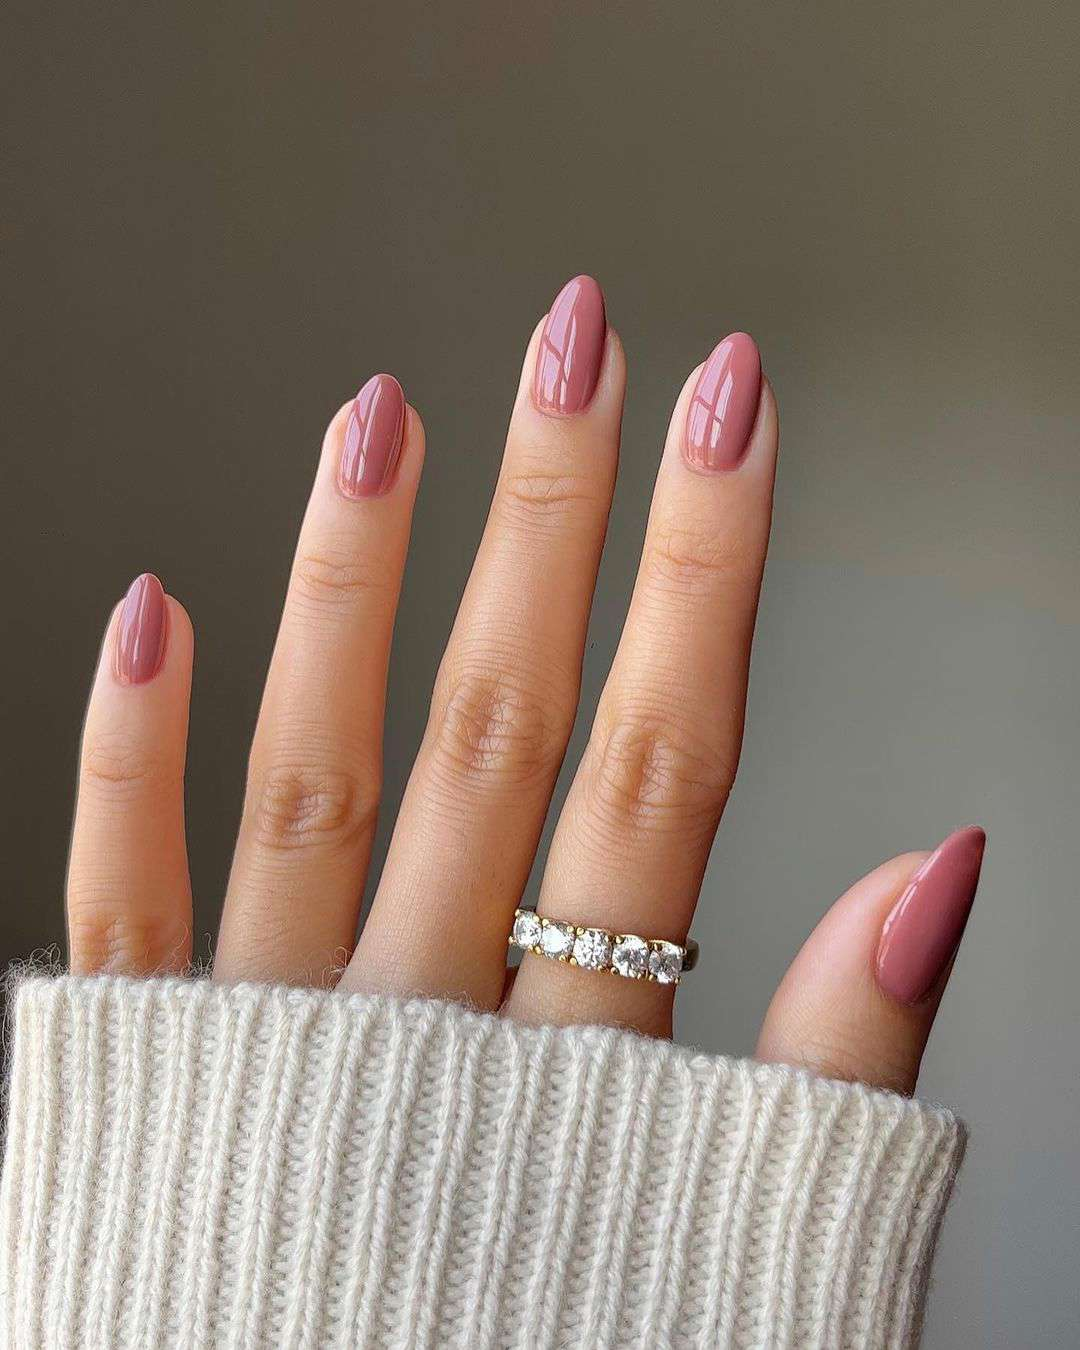 15 uñas permanentes bonitas para inspirarte: rosa